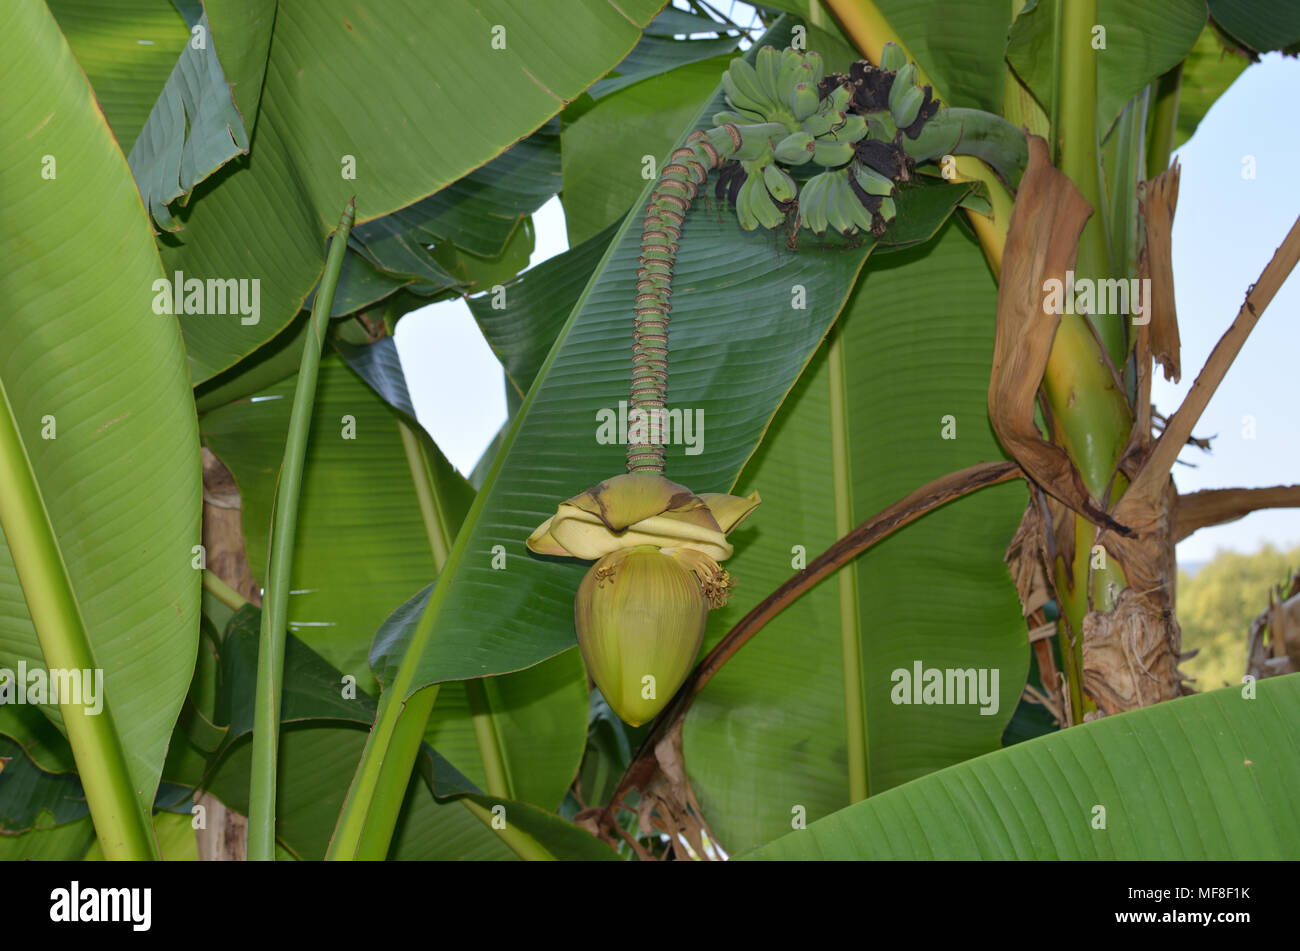 Flower of lush banana tree with small green bananas Stock Photo